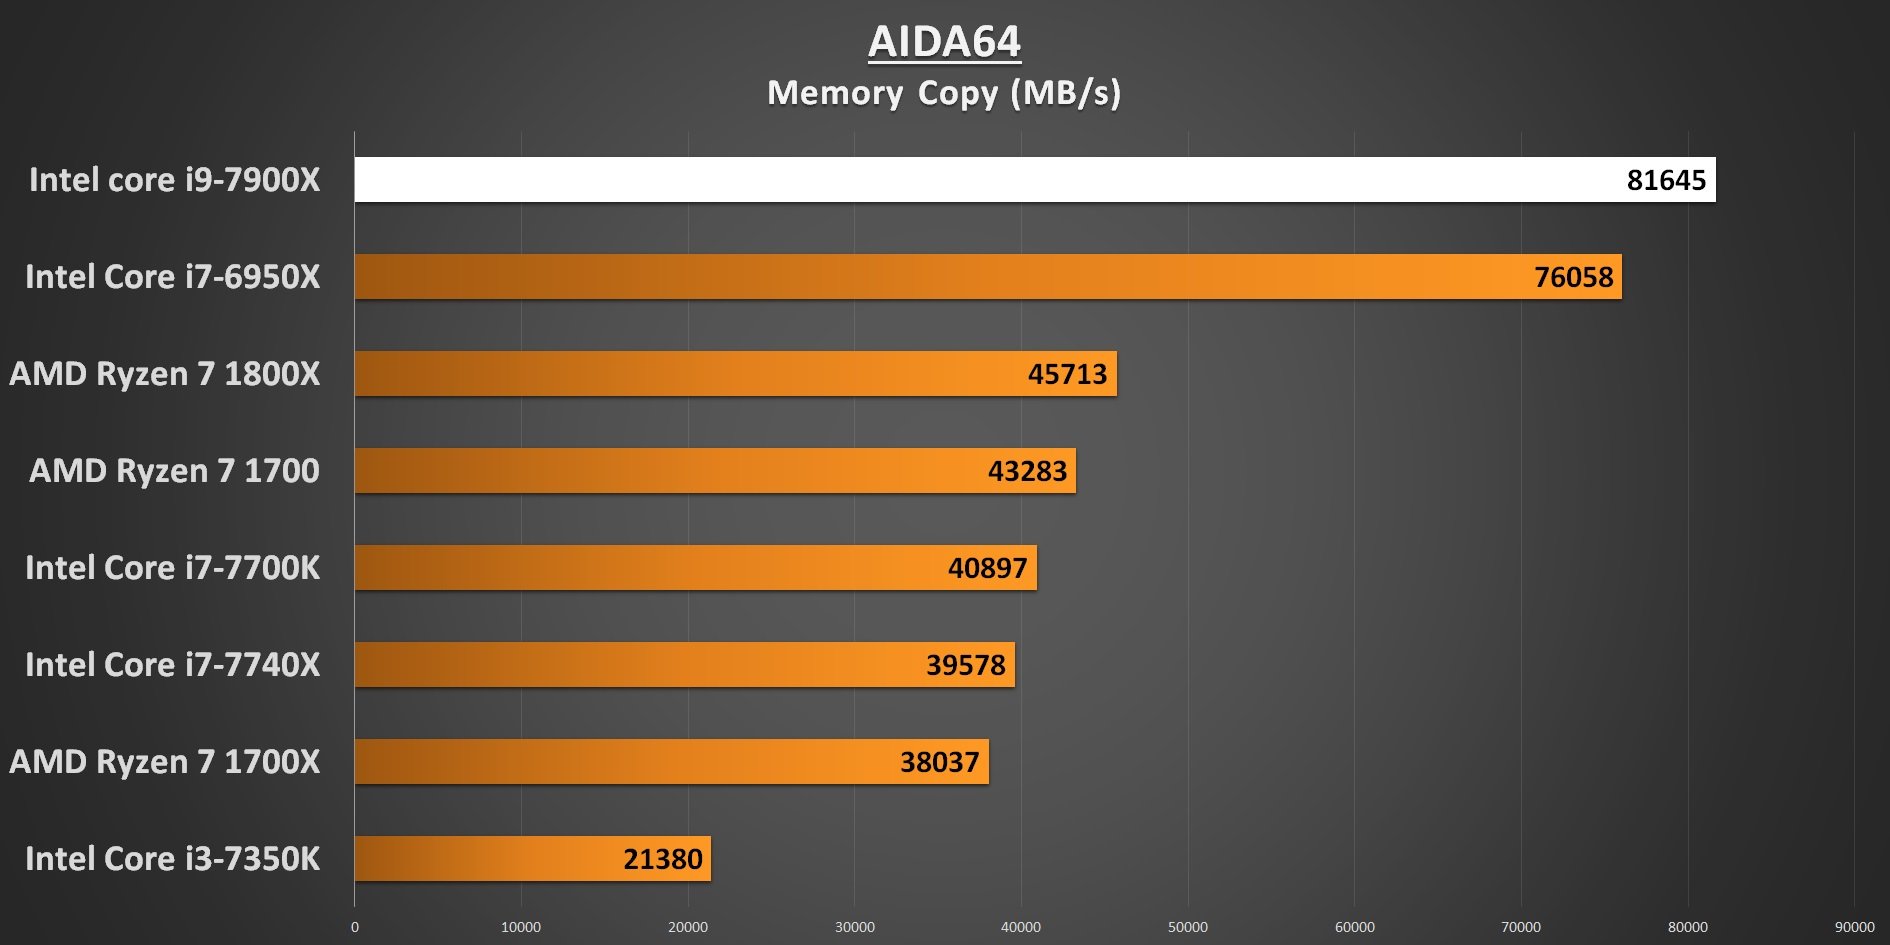 AIDA64 Memory Copy 7900X Performance